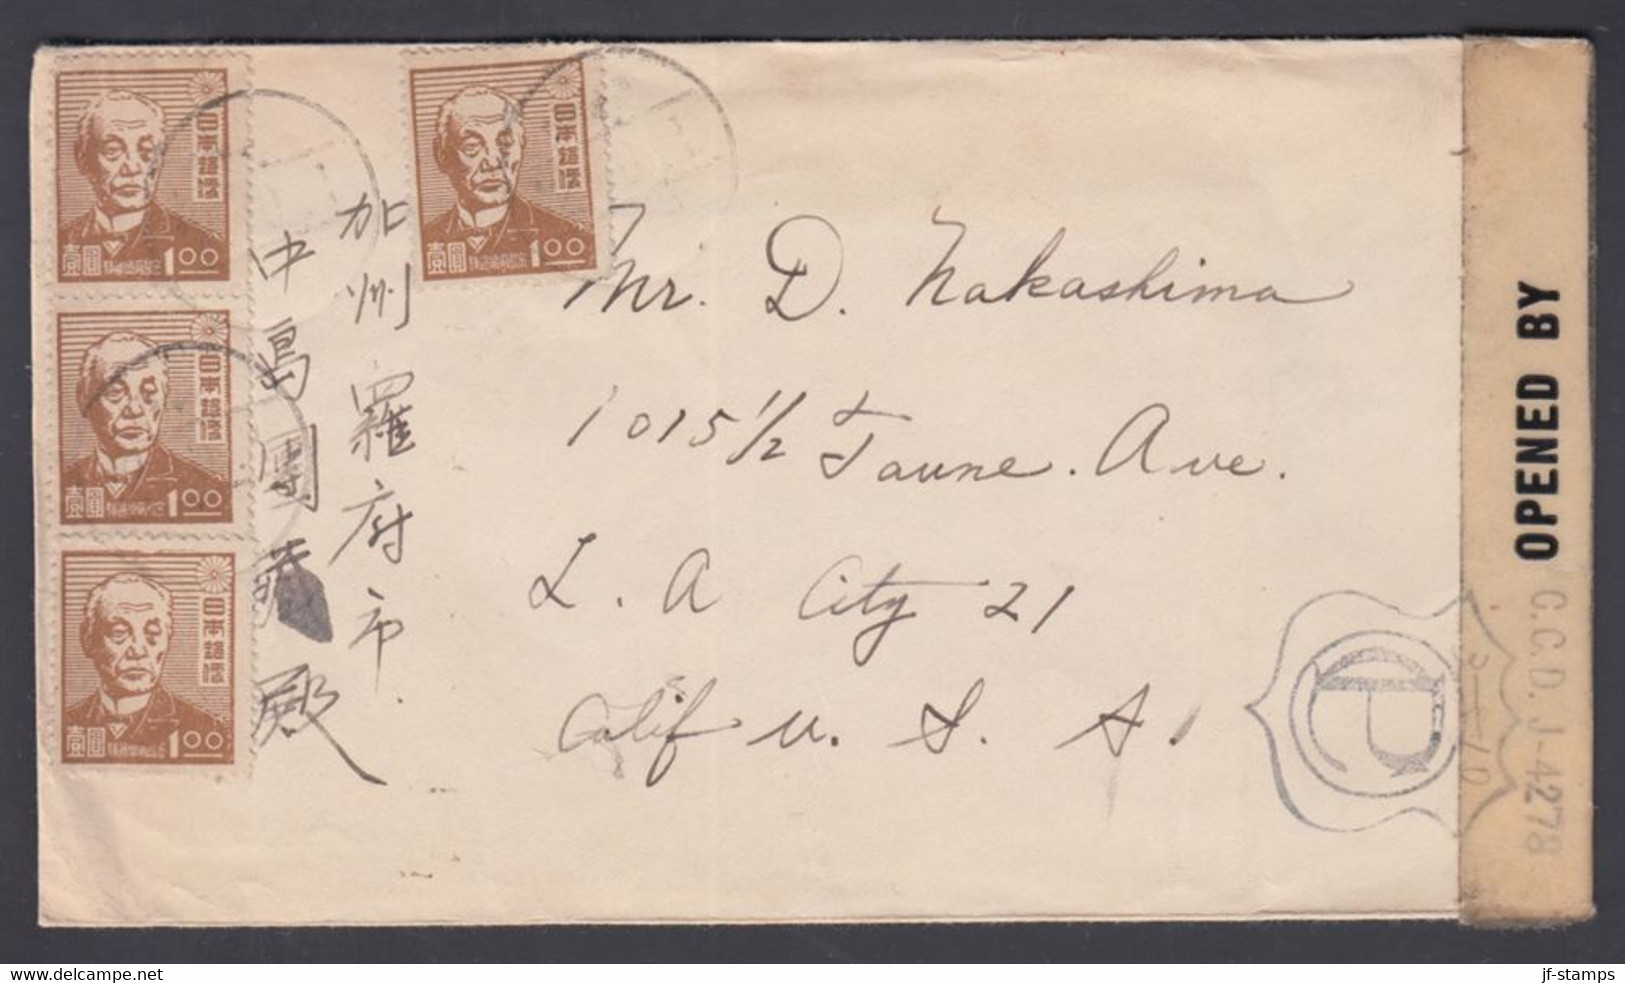 1947. JAPAN 4 Ex 1.00 Y Hisoka On Cover To Los Angeles, Calif. USA. Censor Tape OPENE... (Michel 373) - JF367894 - Briefe U. Dokumente